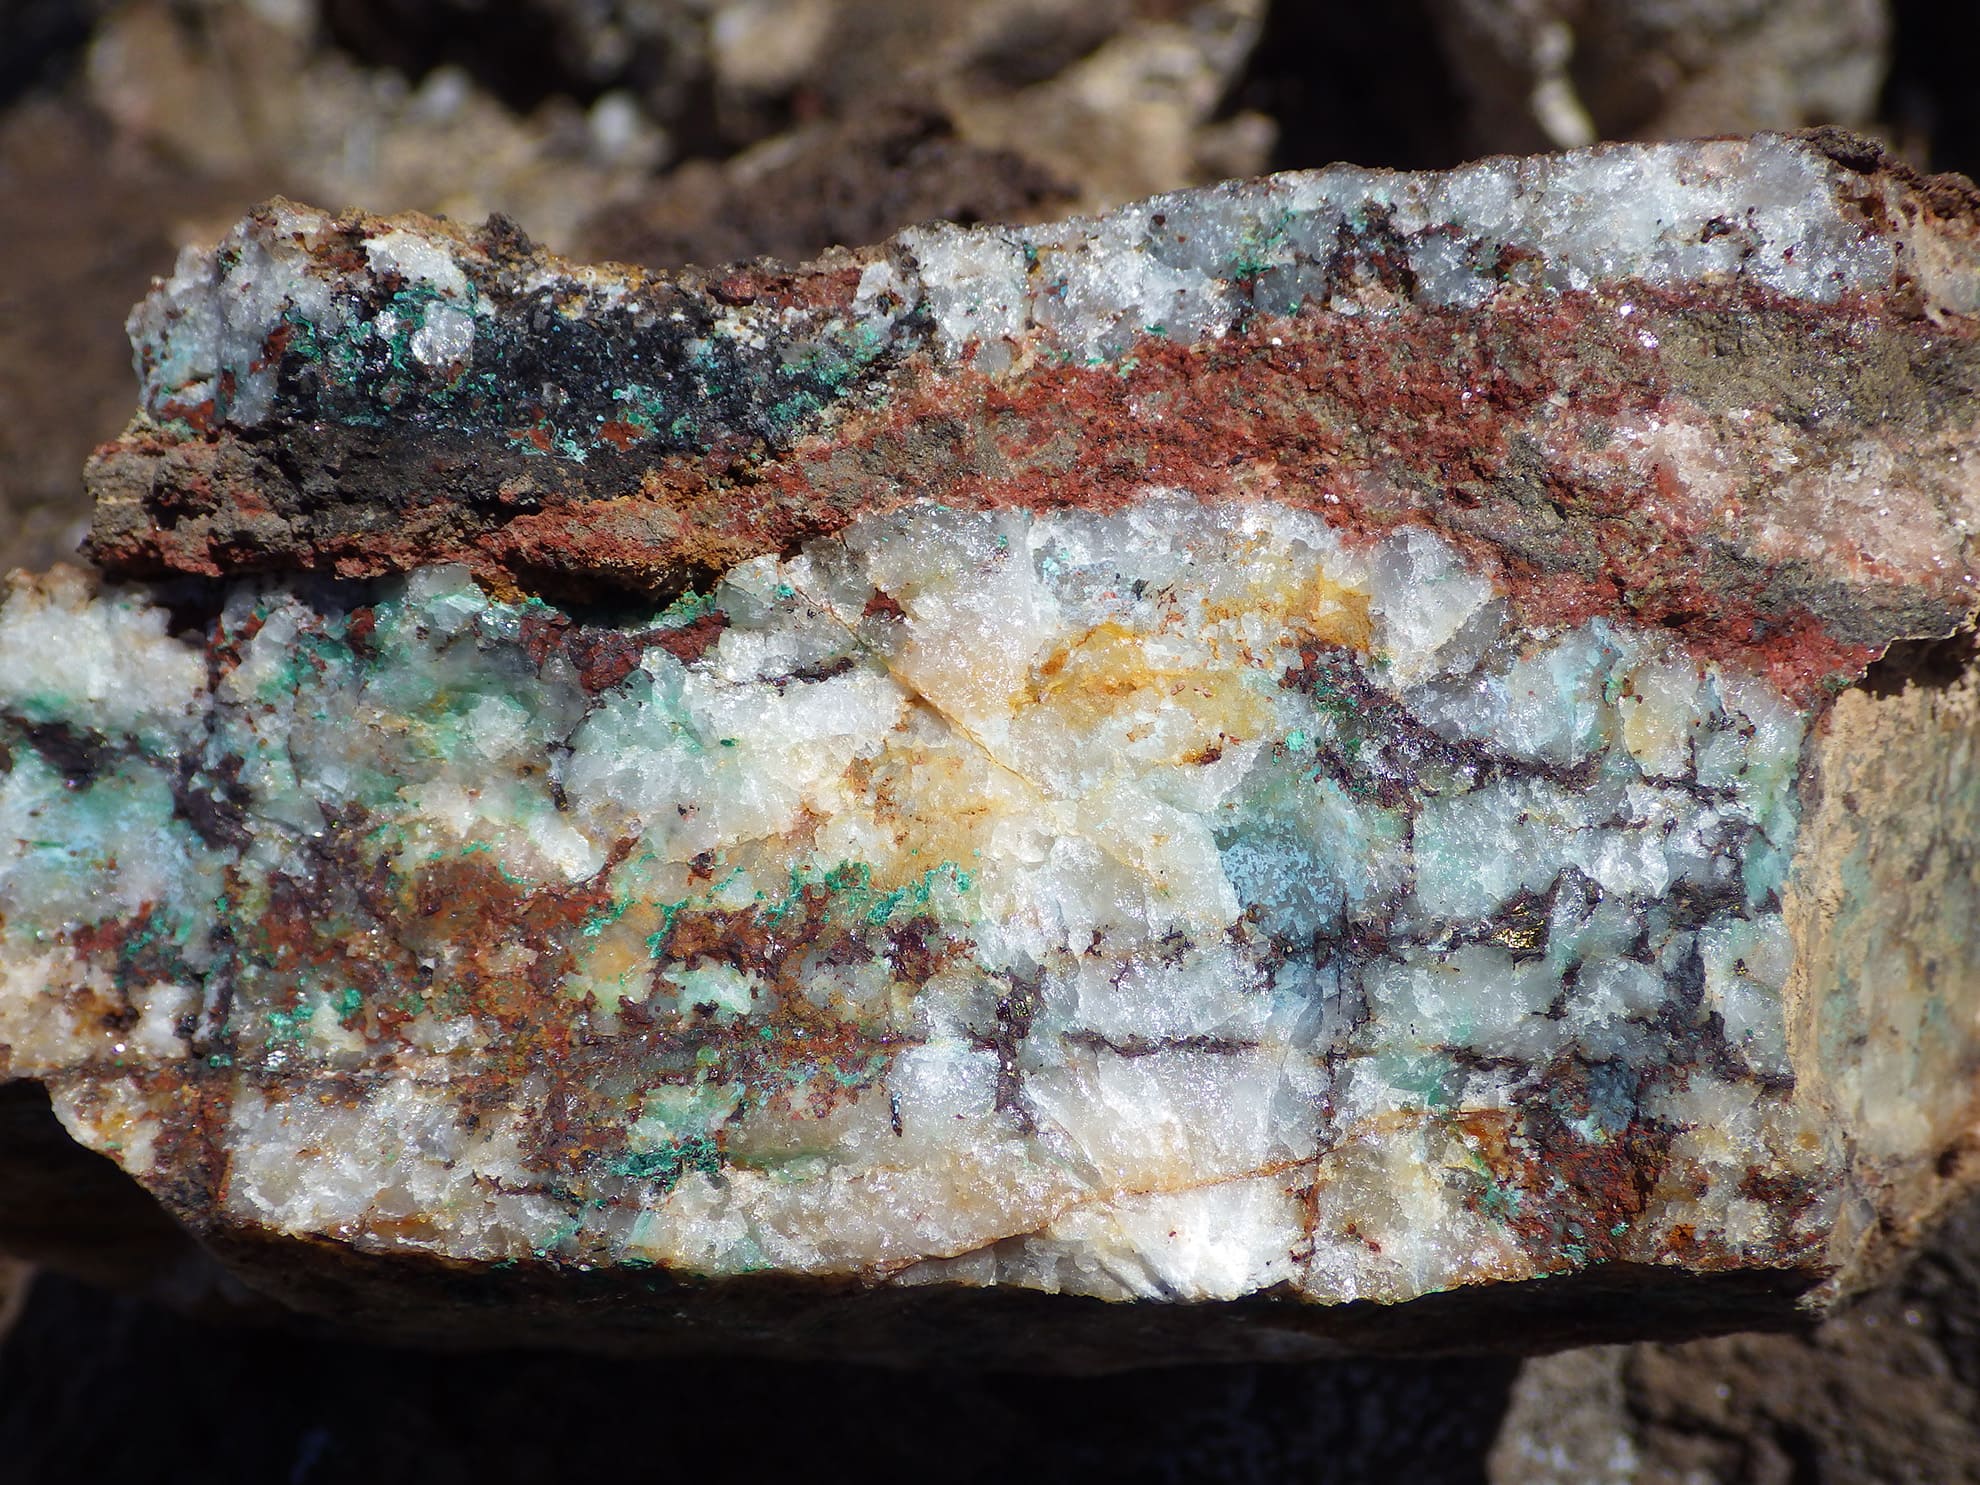 Quartz vein with garnet and chalcopyrite (copper sulfide), and glass limonite replacing chalcopyrite, East Zone